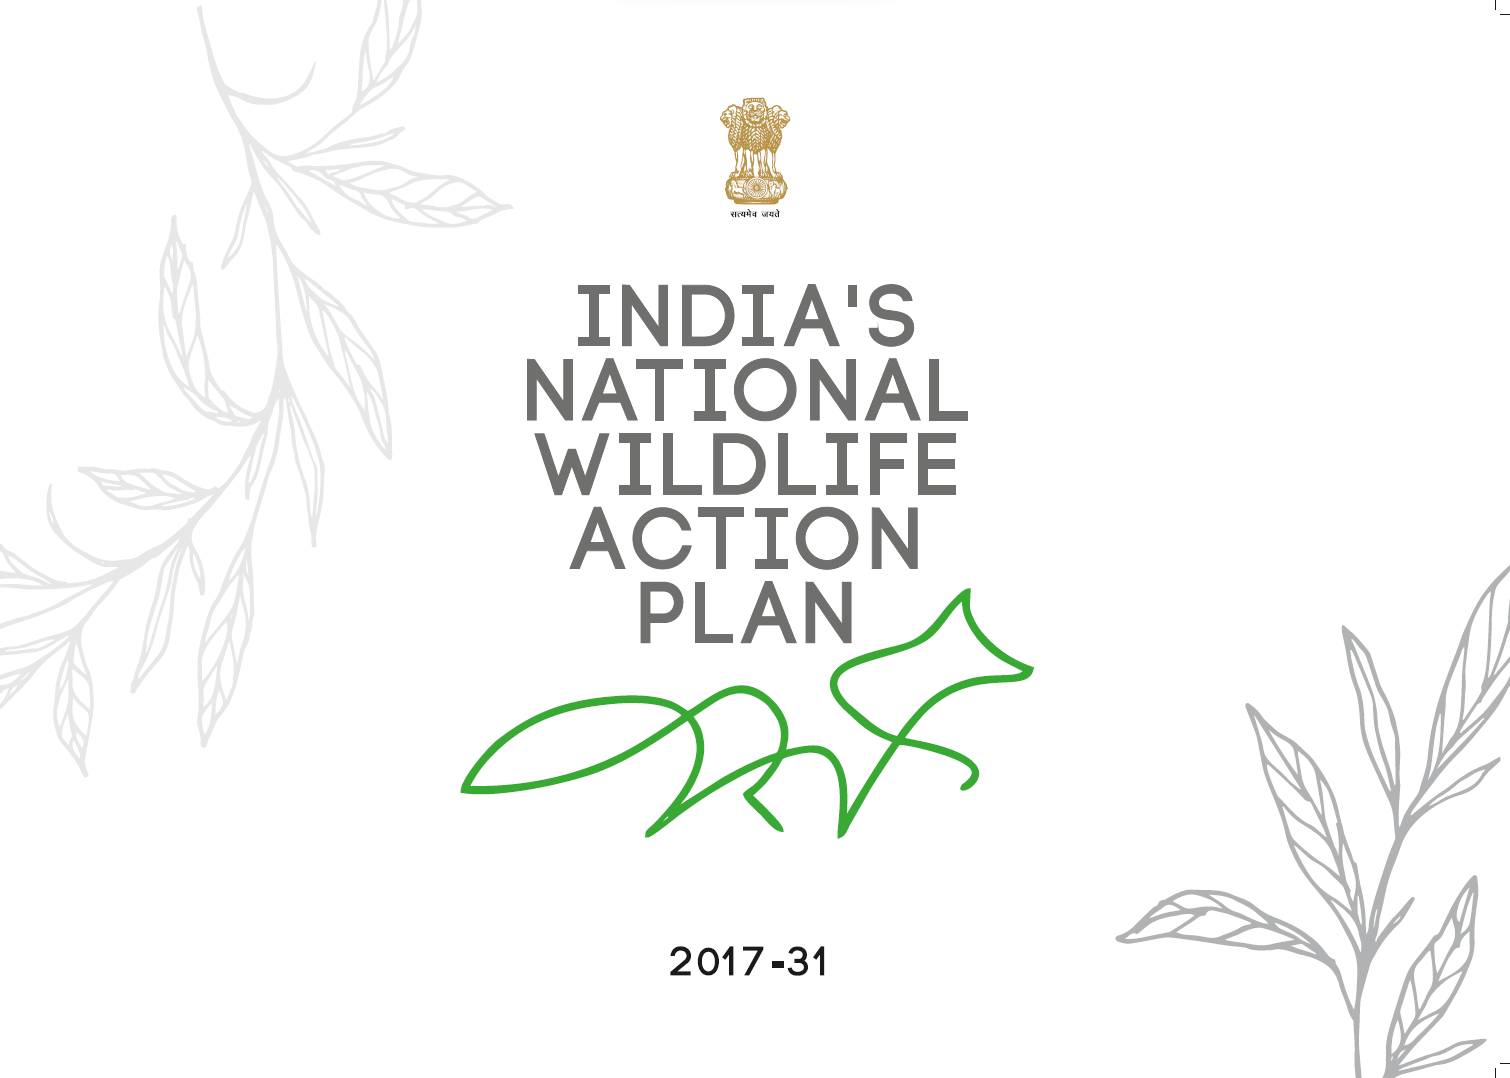 India’s national wildlife action plan 2017-2031